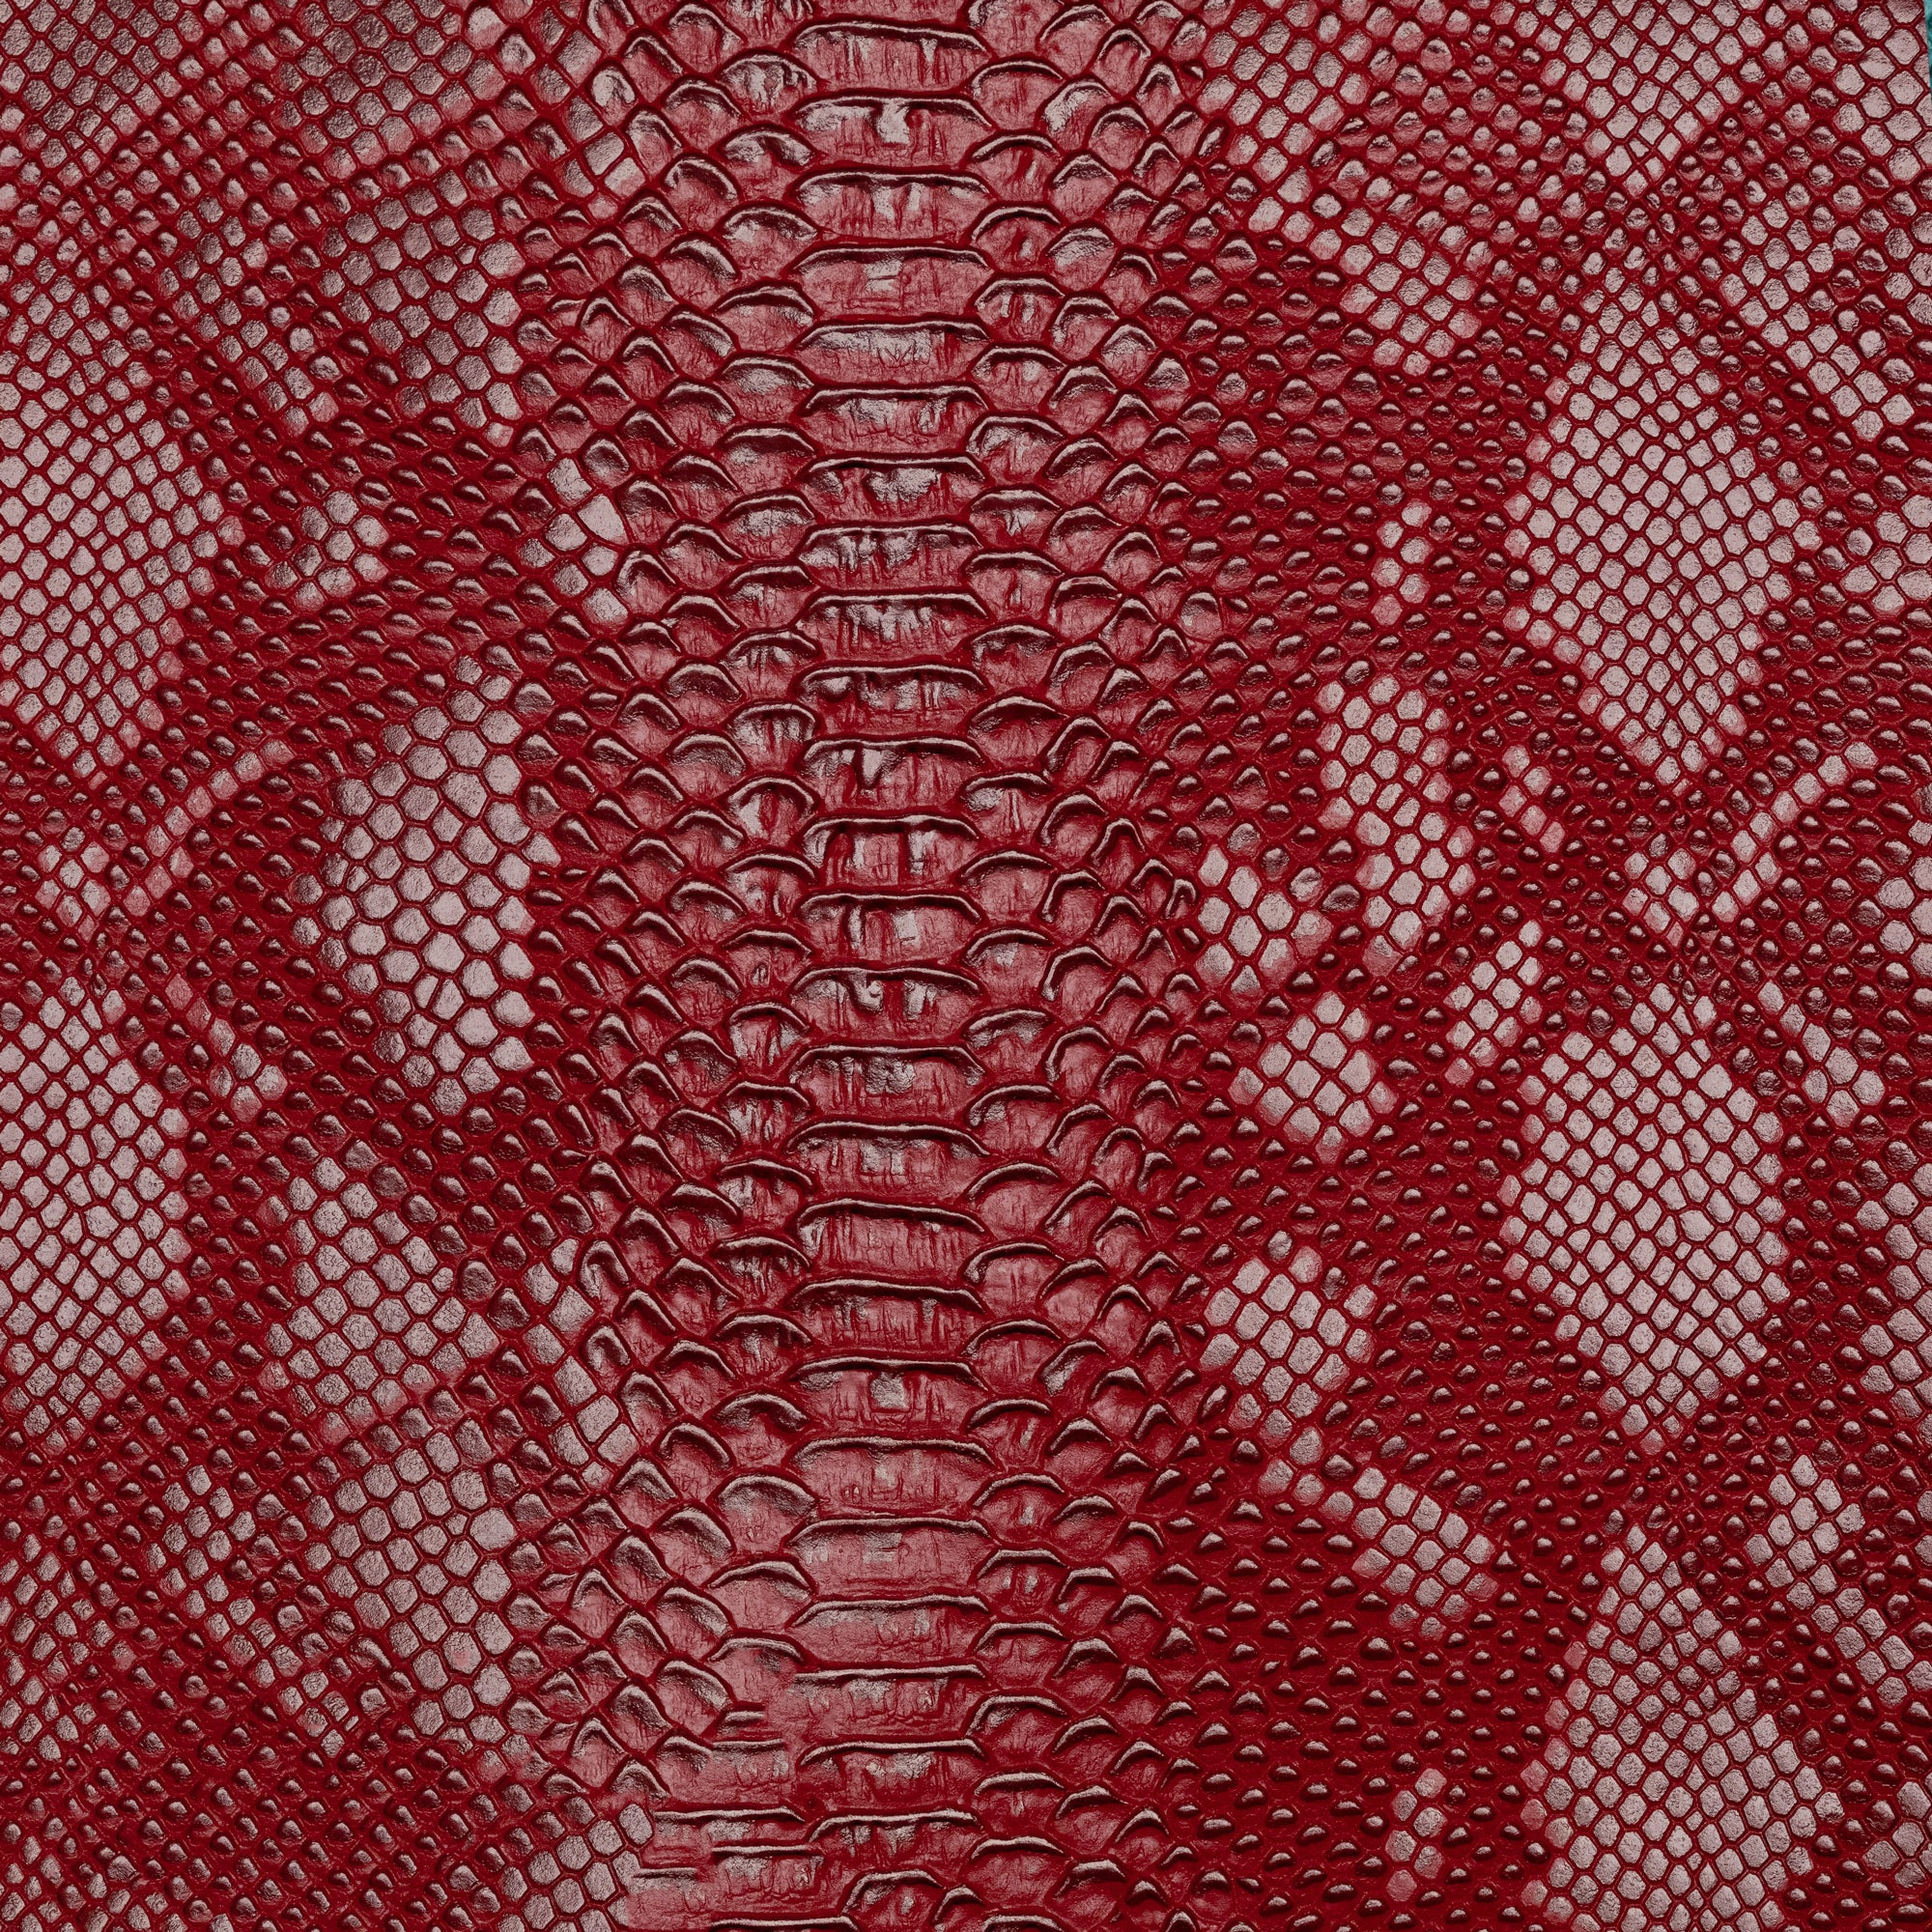 Green Snake Skin Fabric Variation 2 -  Canada